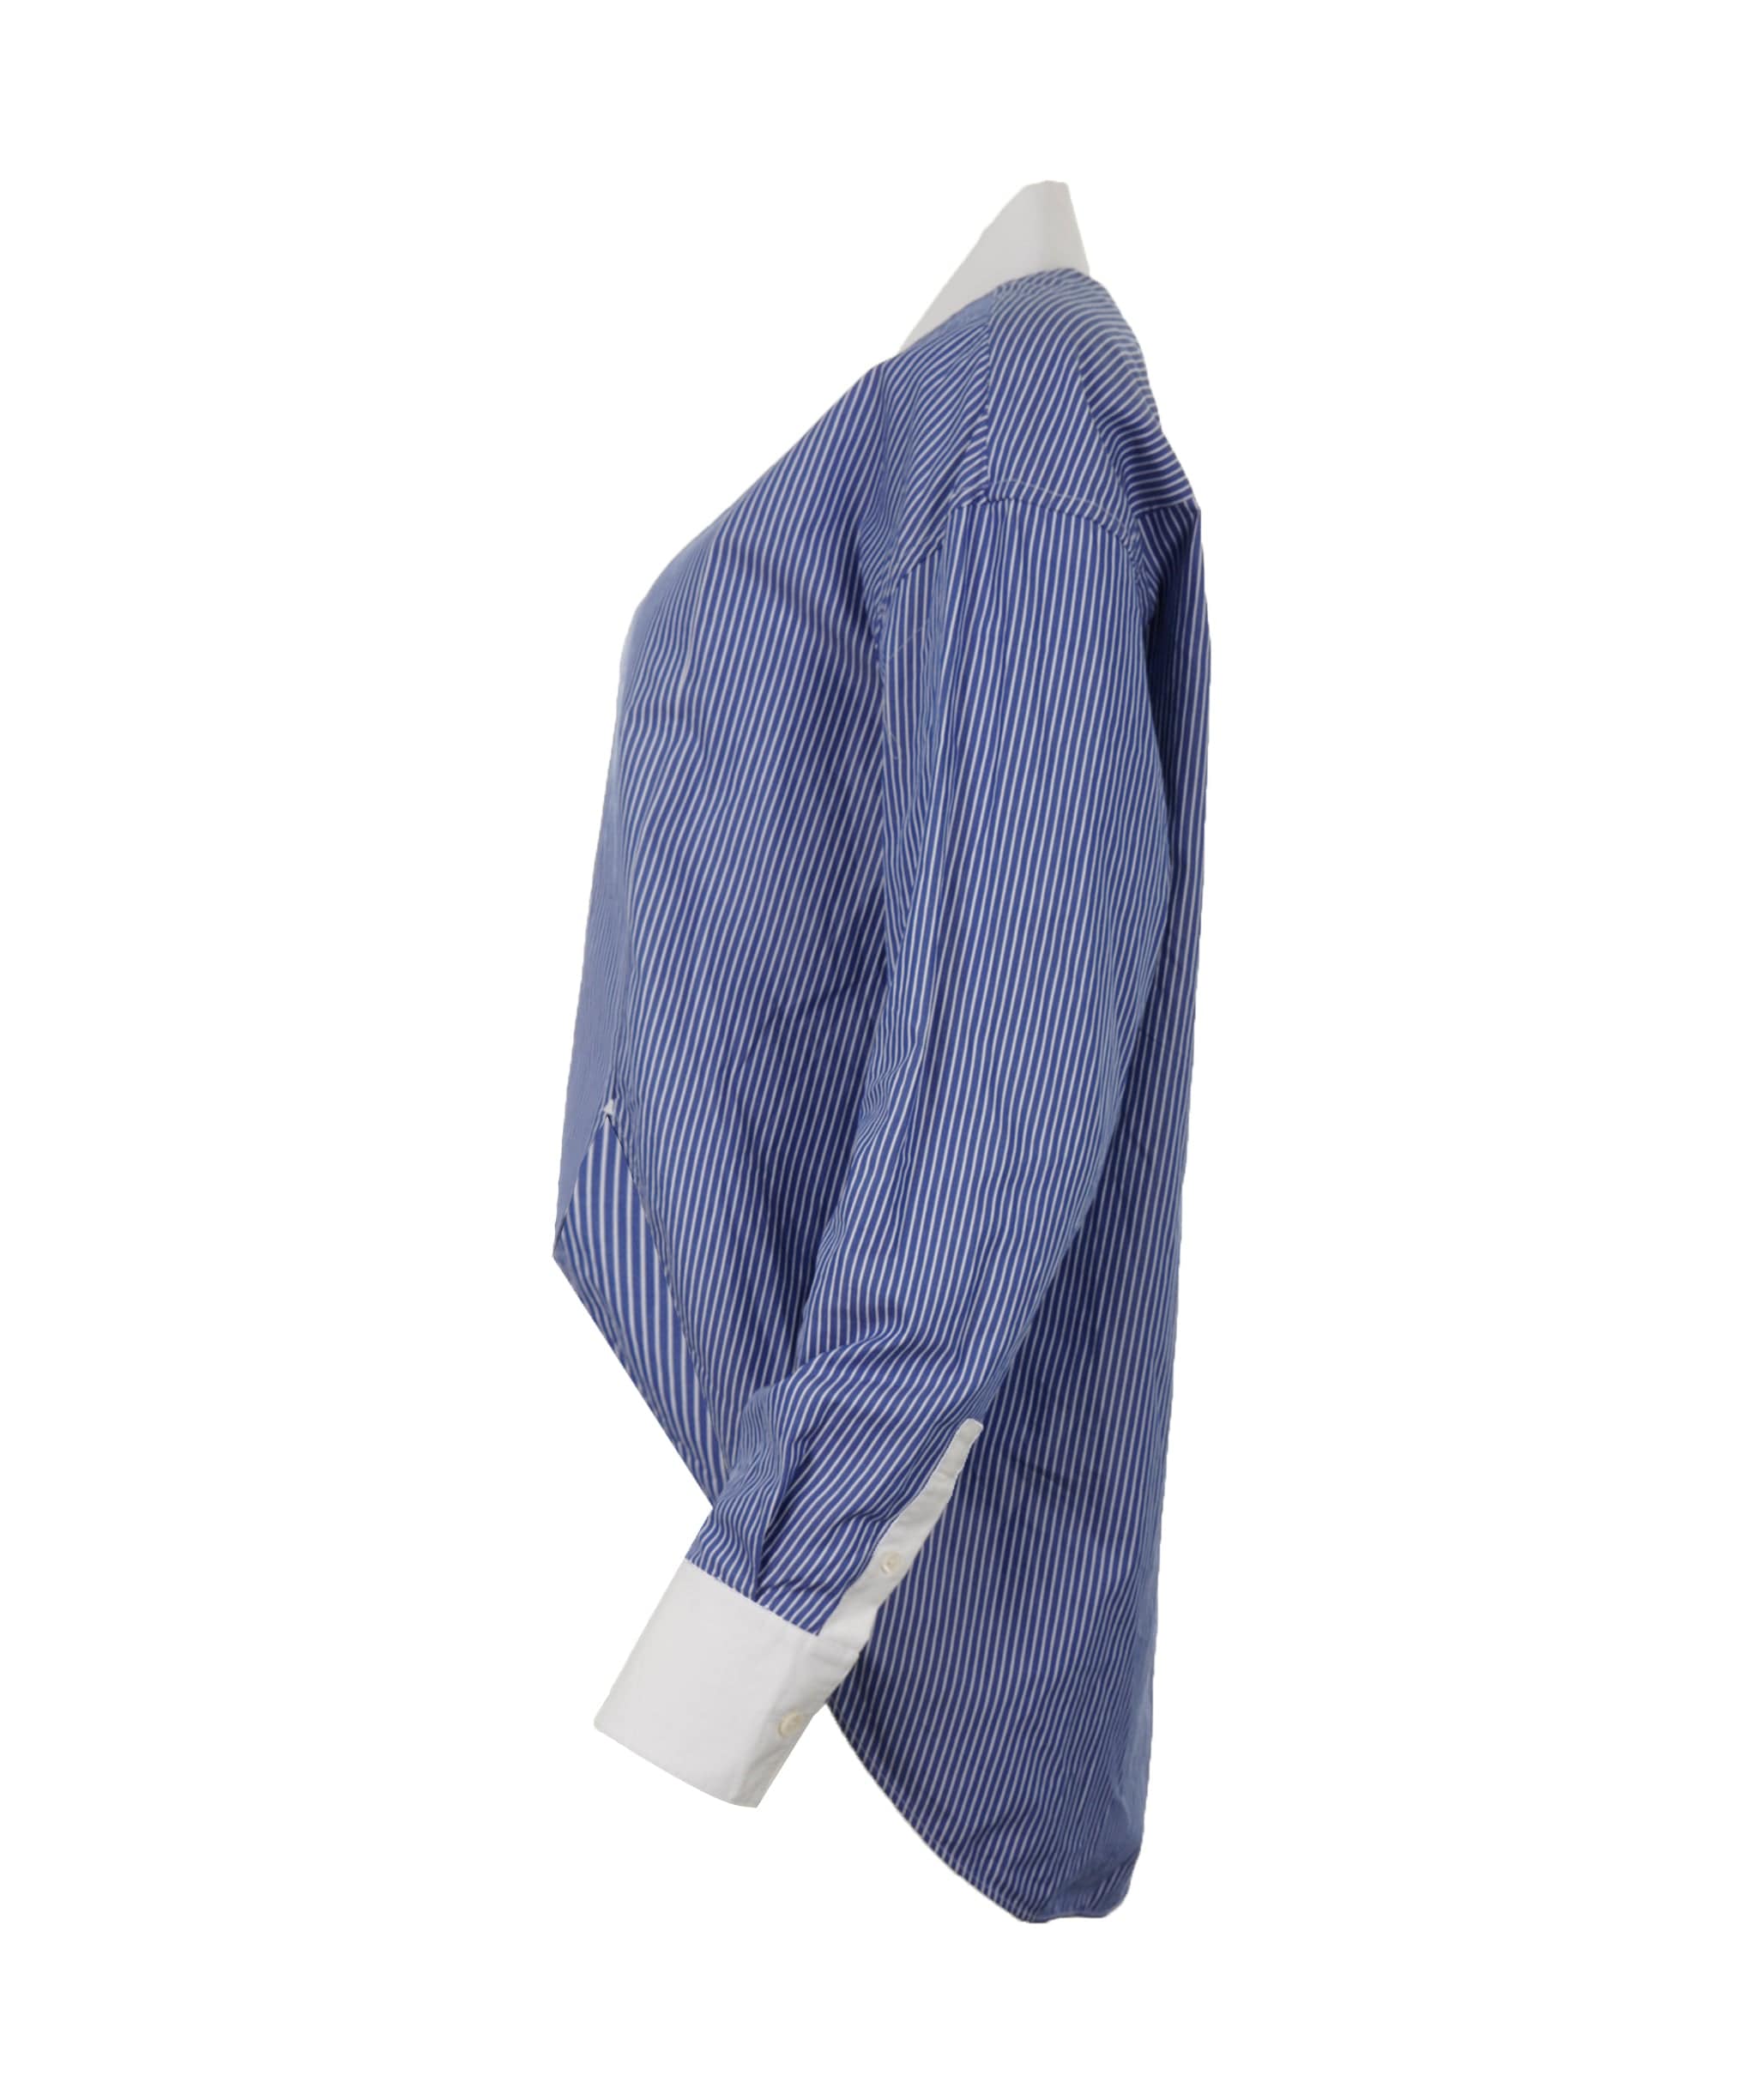 Loewe (Copy) Loewe Anagram Blue Stripe Shirt Size 34 (Ideal for UK 6-10) ALL0471